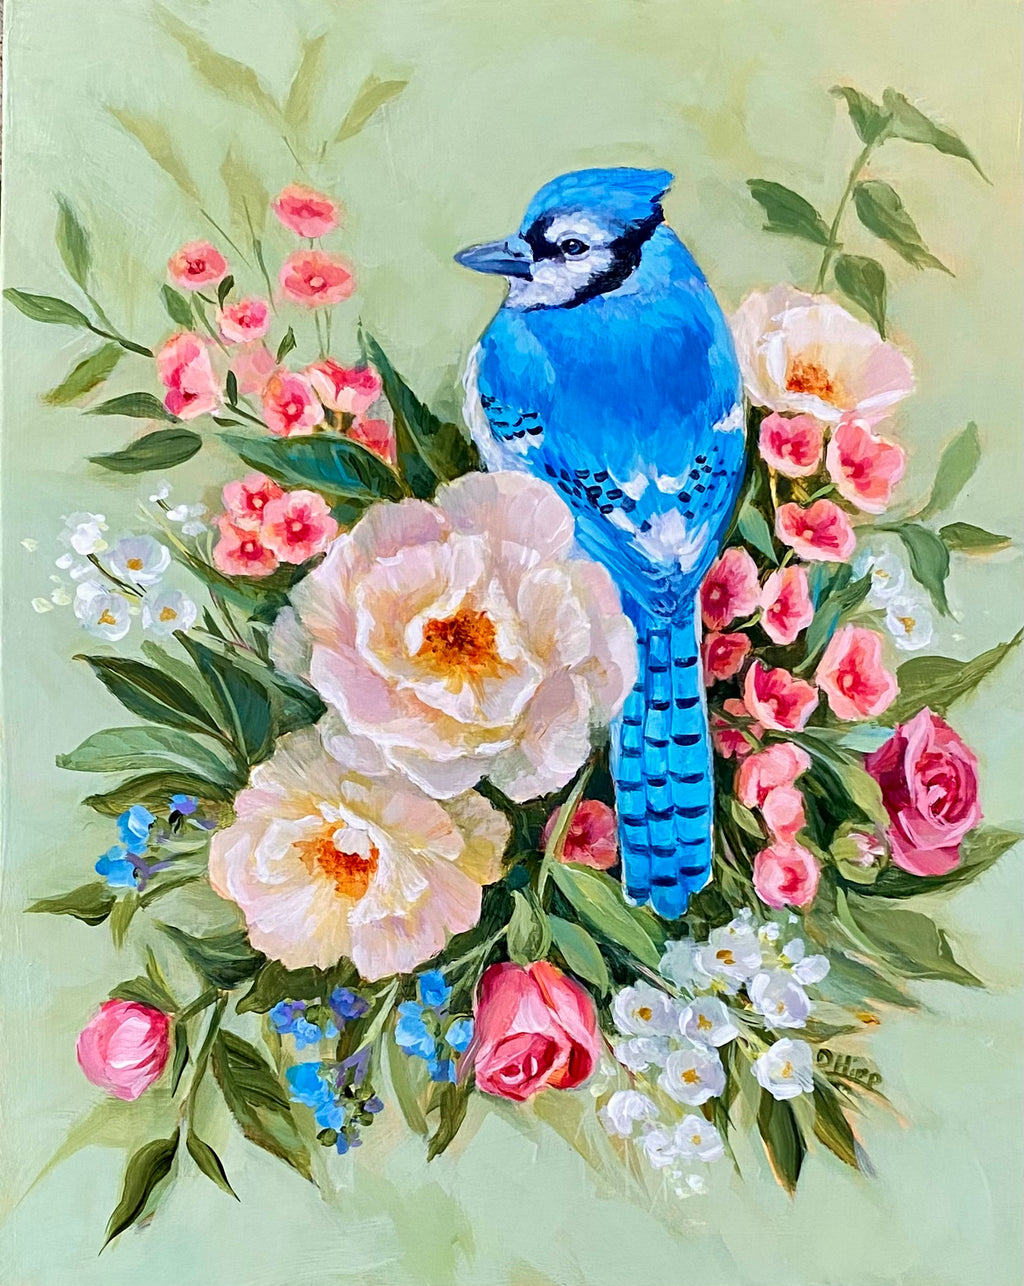 Birds & Blooms: Blue Jay Bouquet